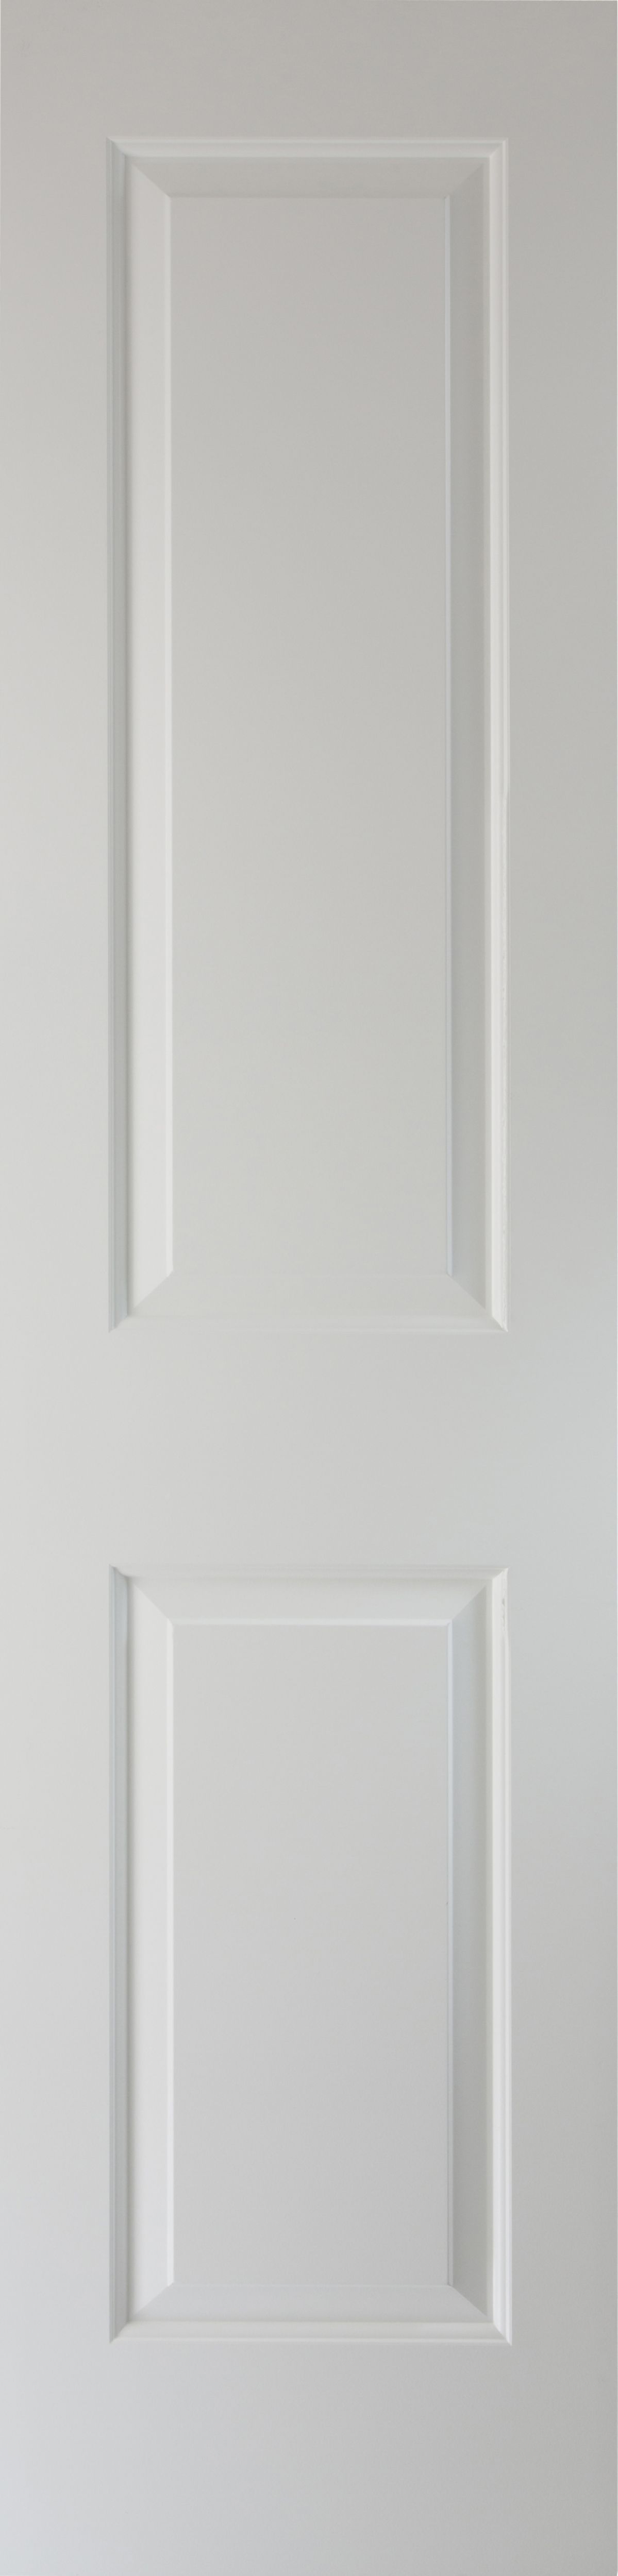 2 panel Unglazed Contemporary White Internal Door, (H)1981mm (W)457mm (T)35mm